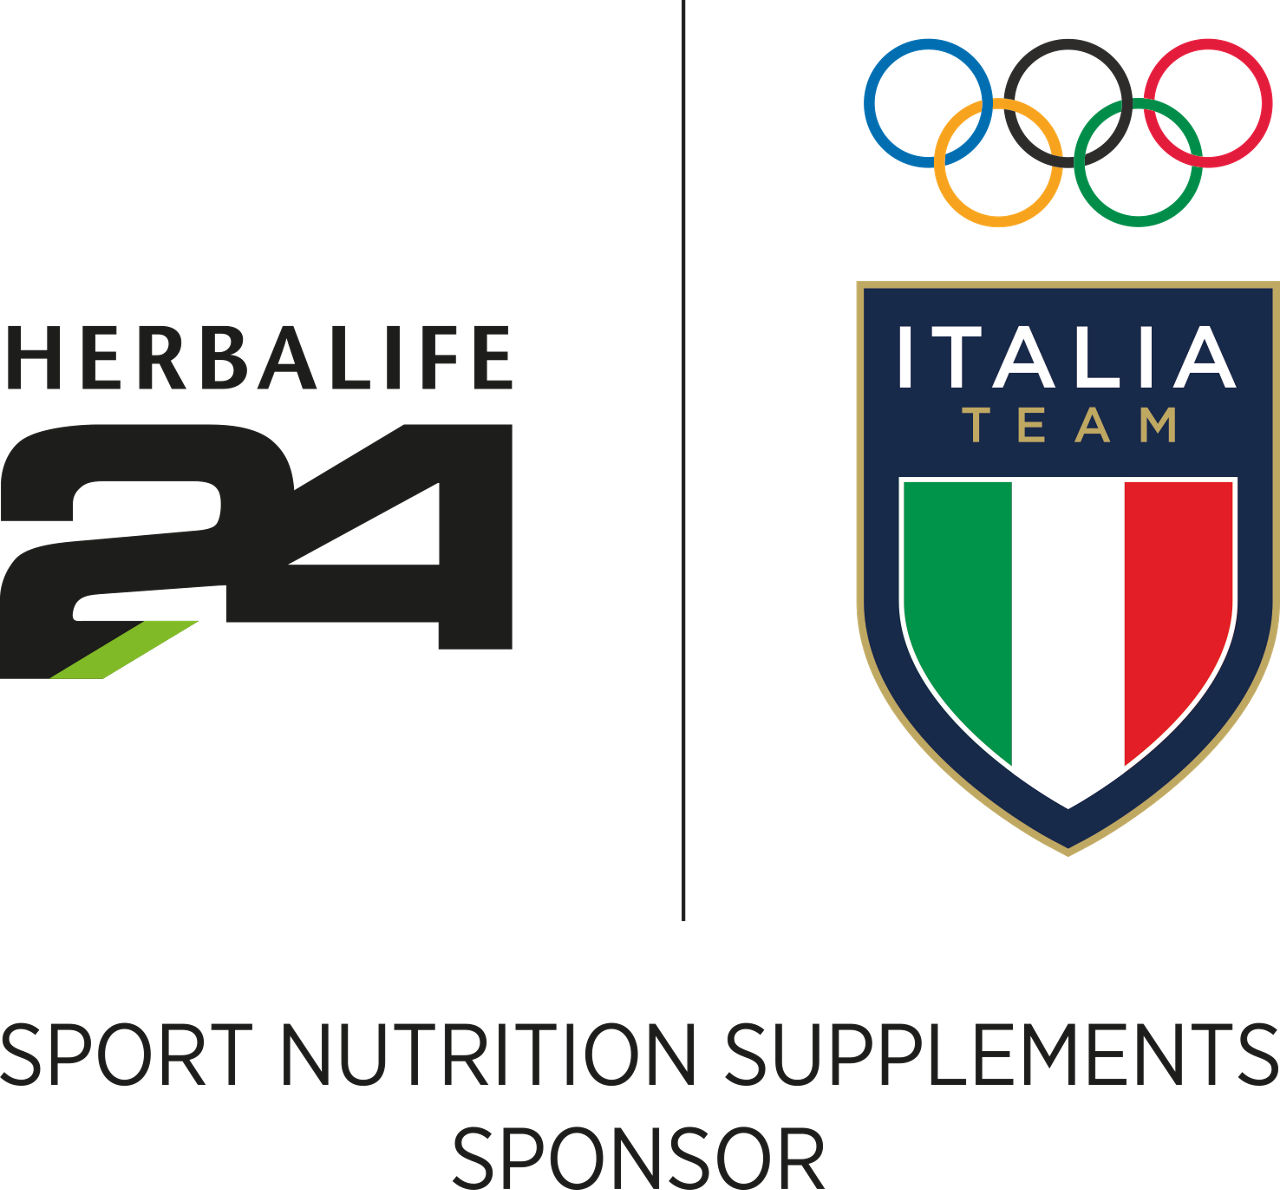 Comitato Olimpico Italiano e loghi Herbalife24®